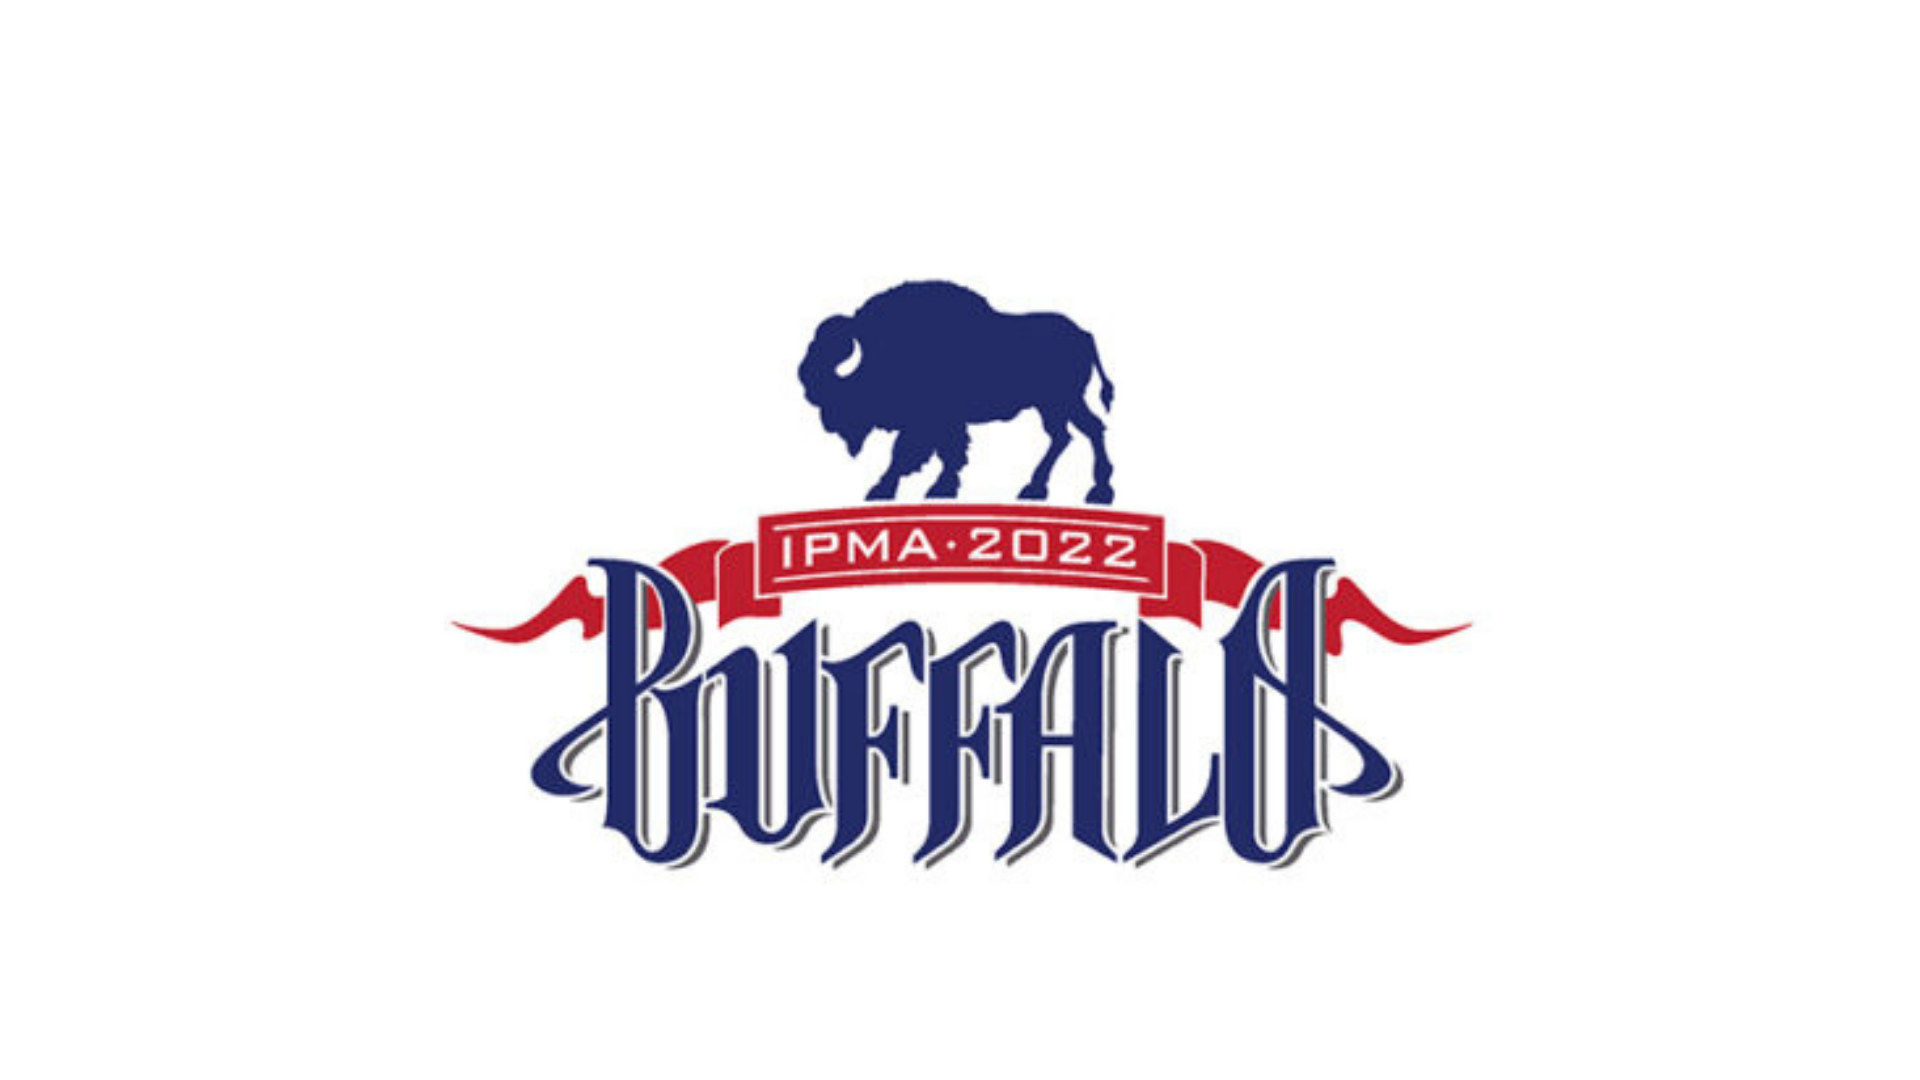 IPMA logo 2022